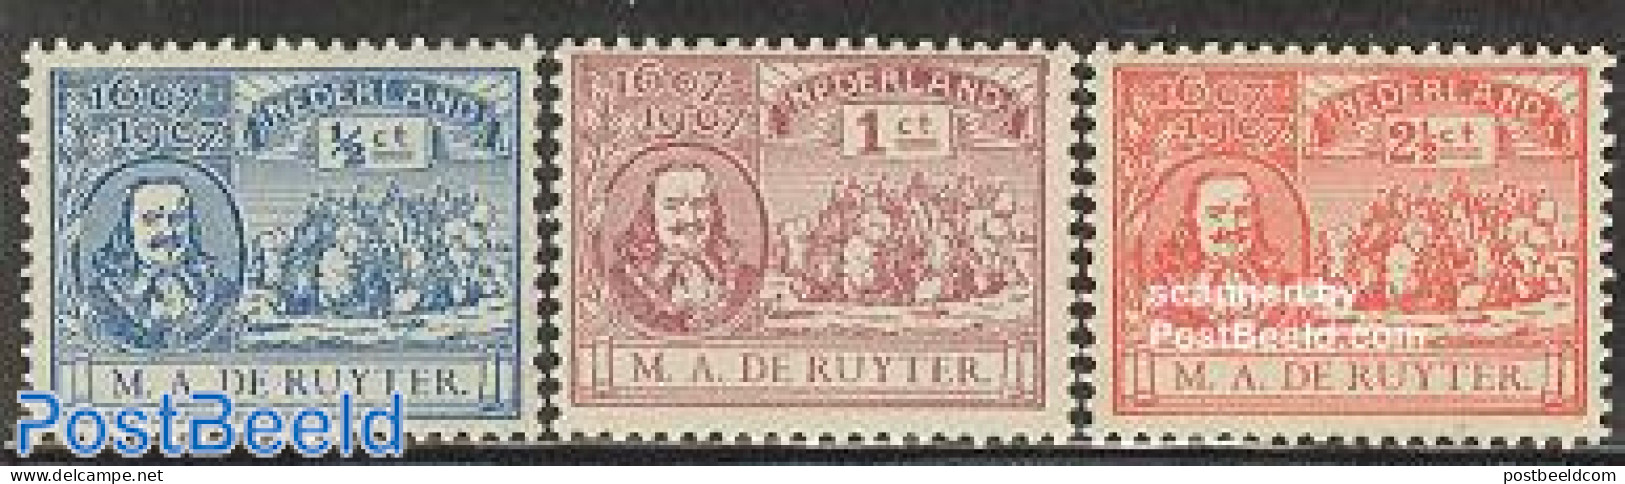 Netherlands 1907 Michiel De Ruyter 3v, Unused (hinged), Transport - Ships And Boats - Unused Stamps